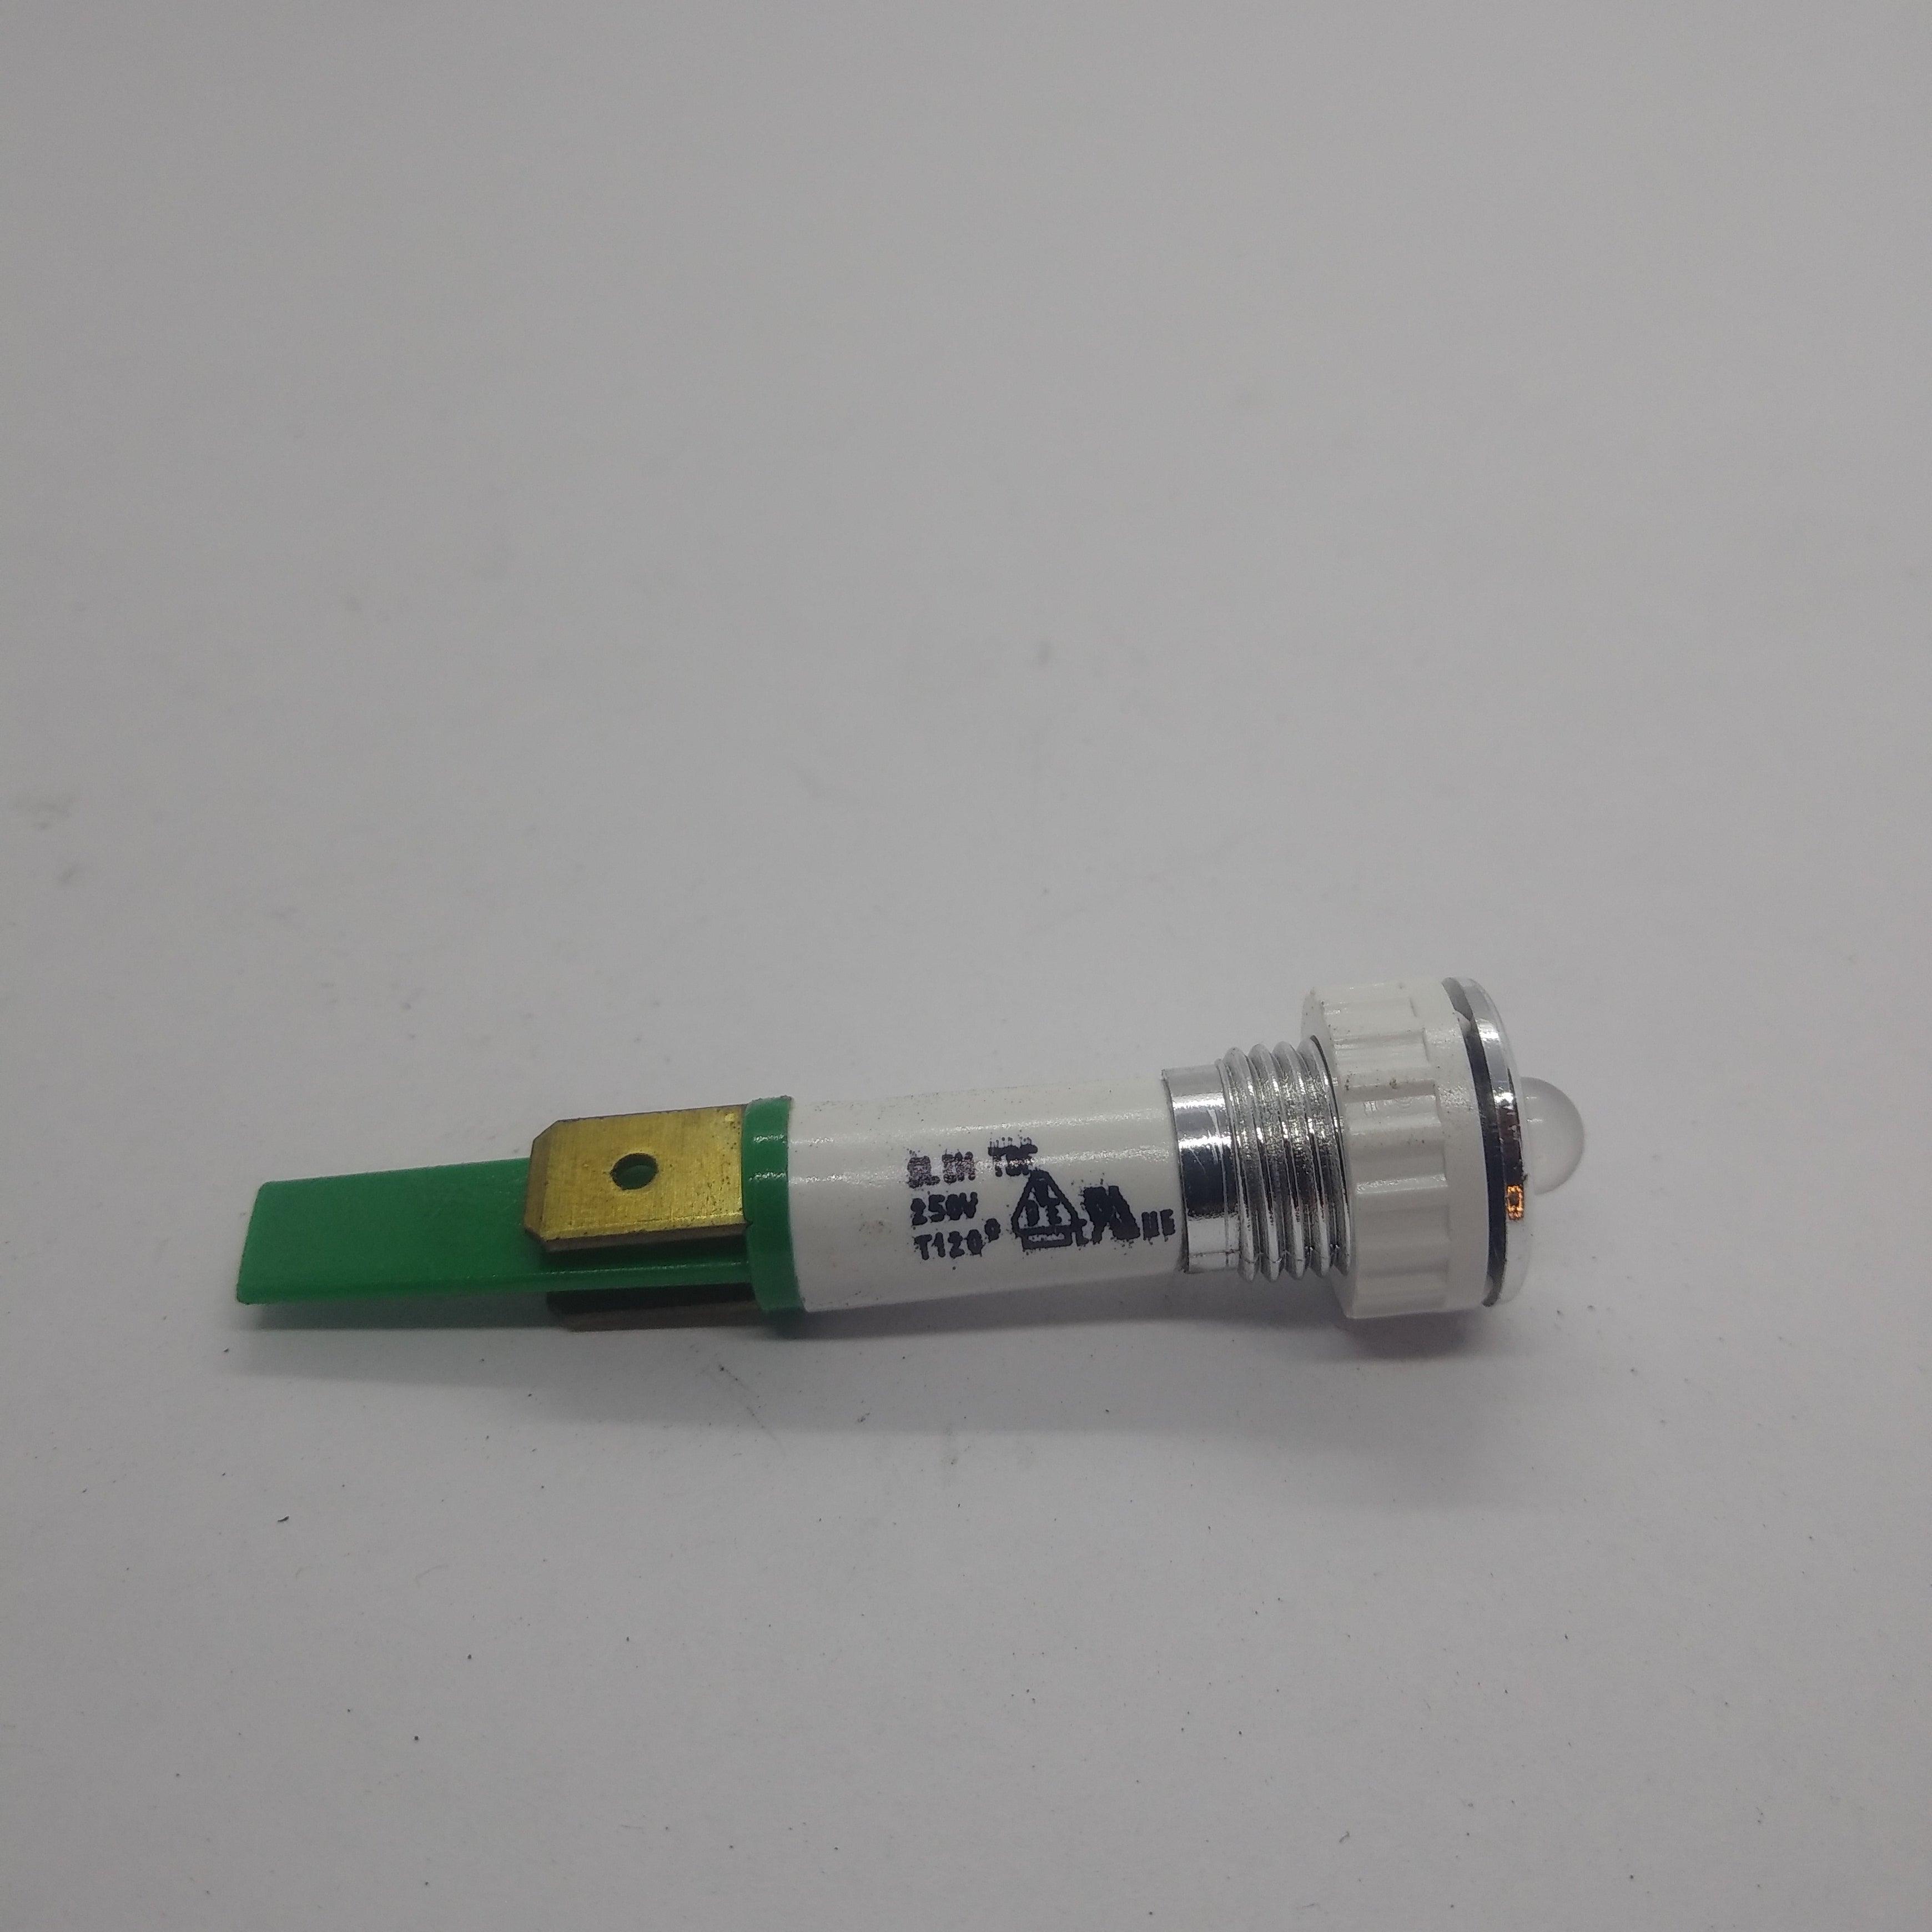 RBEZ021  (RBEZ051) Green Indicator Light for B2013, BZ10, C2013 - AMPTO